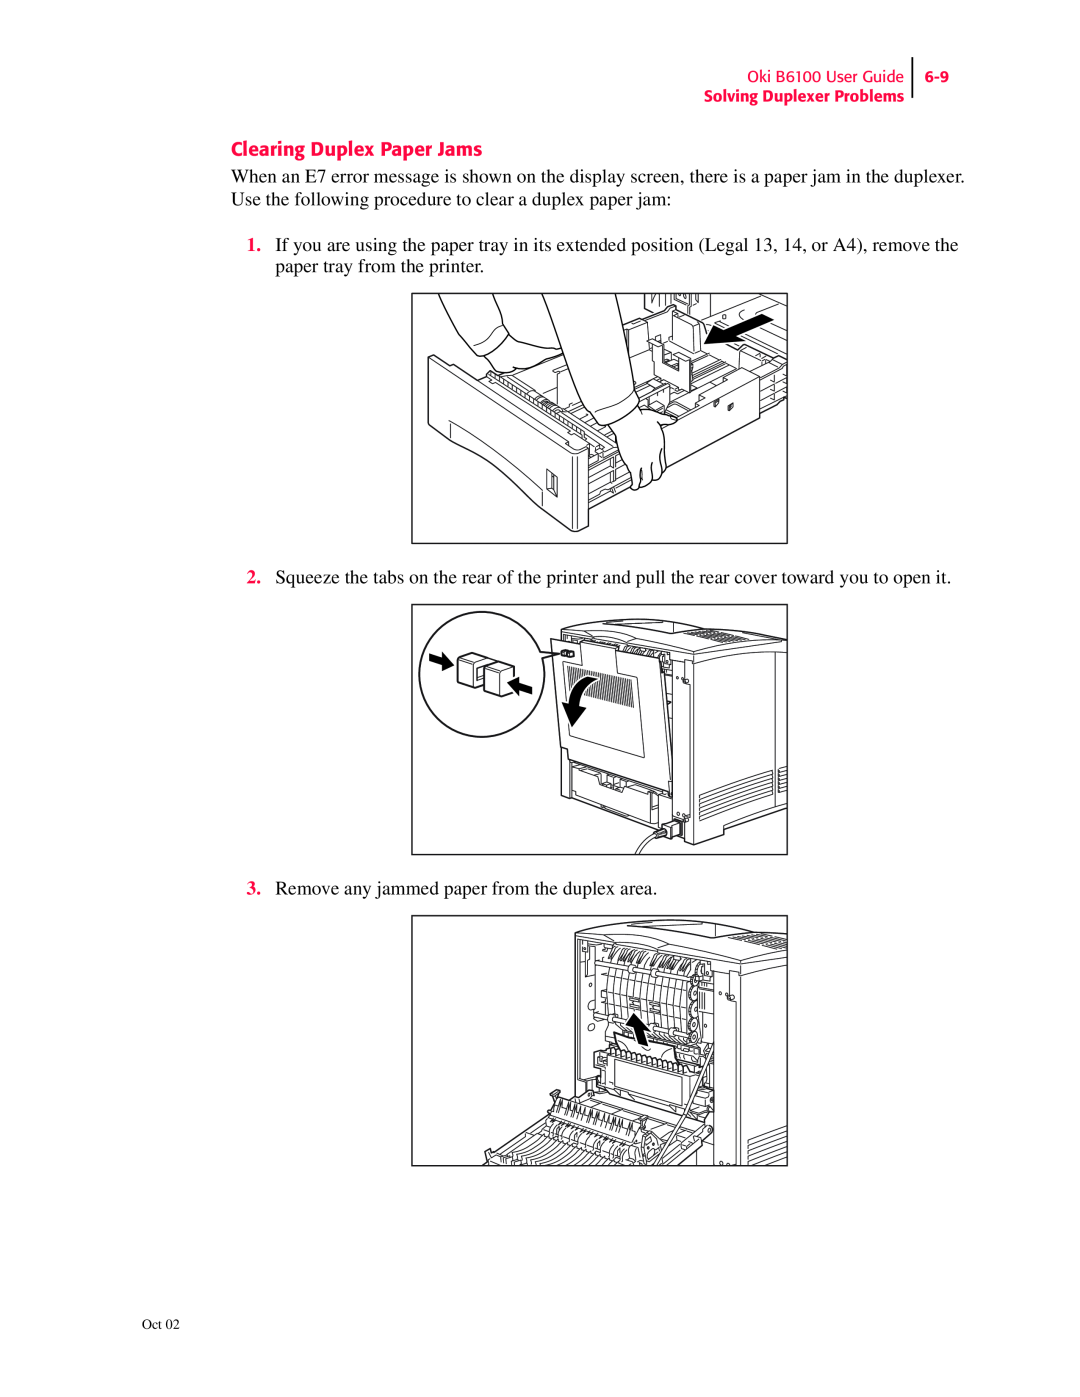 Oki 6100 manual Clearing Duplex Paper Jams 